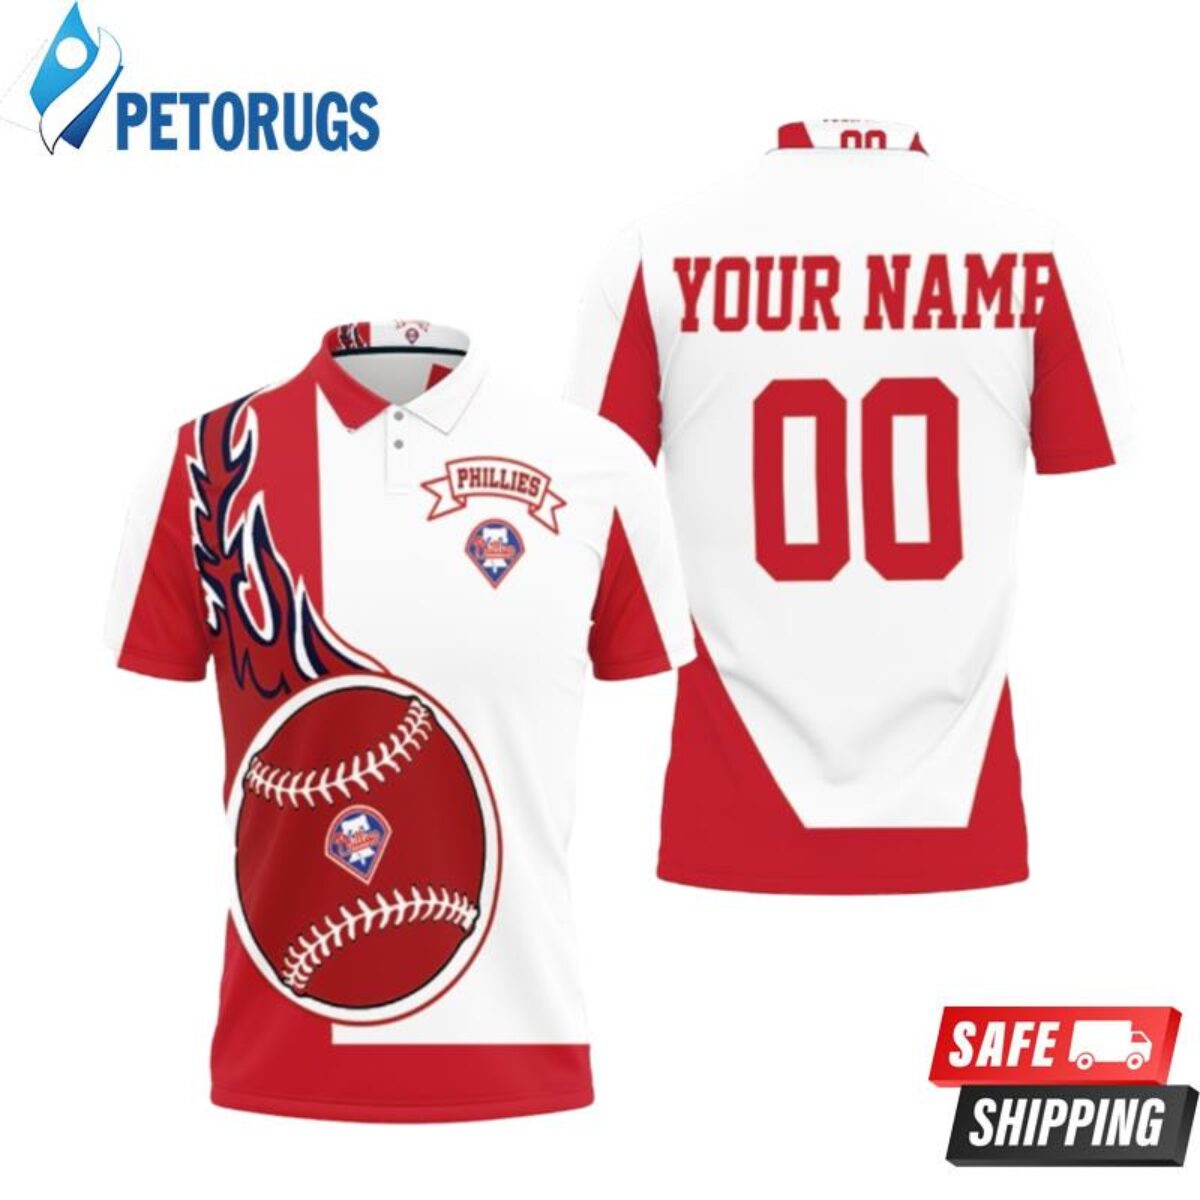 Philadelphia Phillies Personalized Polo Shirts - Peto Rugs